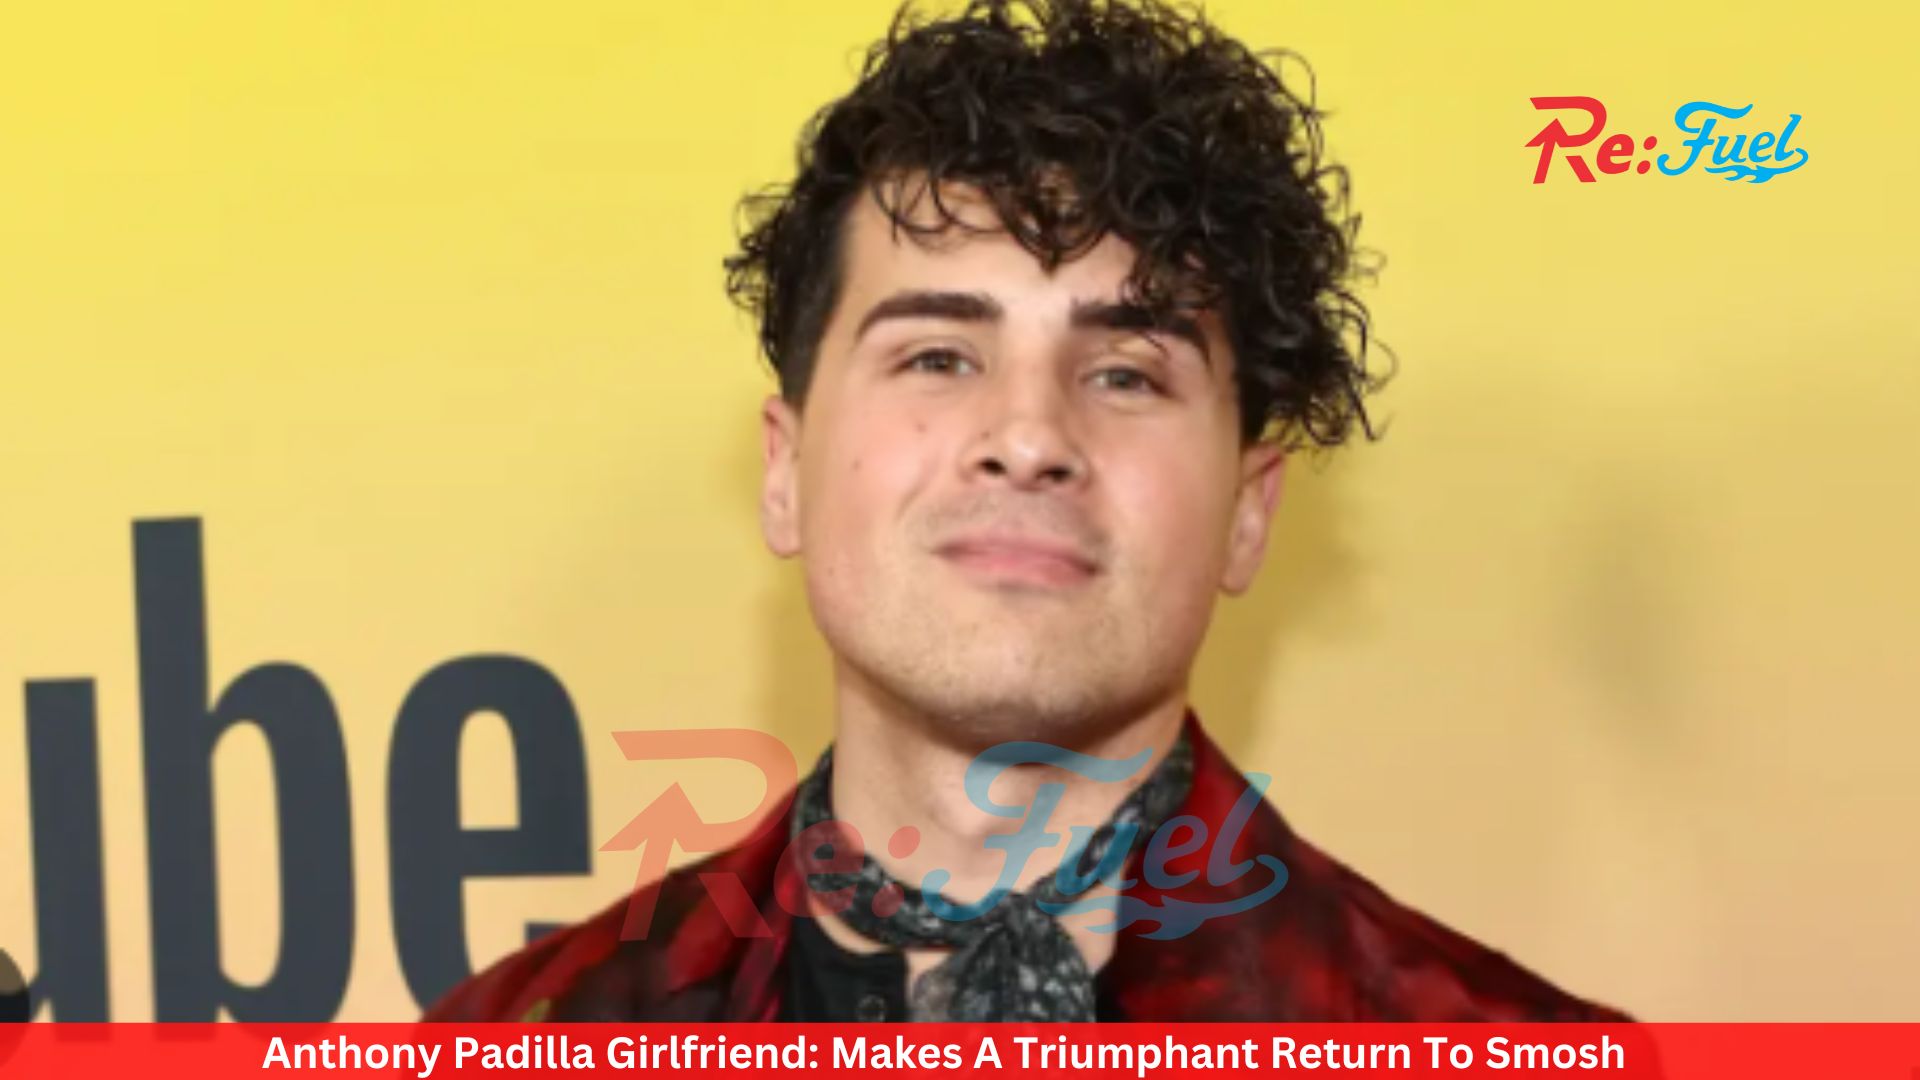 Anthony Padilla Girlfriend: Makes A Triumphant Return To Smosh